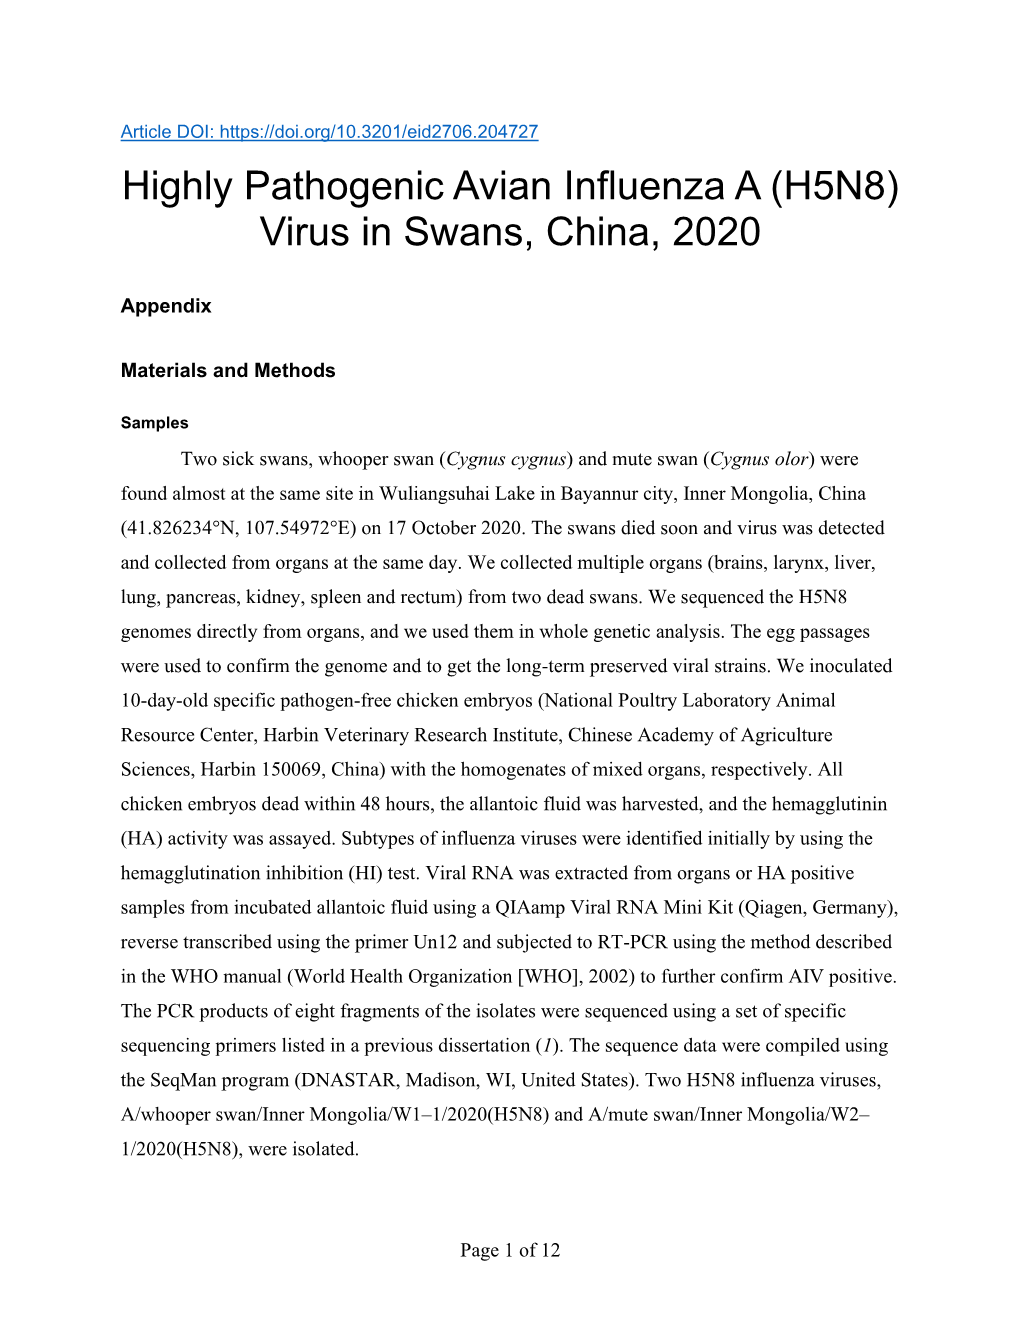 Highly Pathogenic Avian Influenza a (H5N8) Virus in Swans, China, 2020